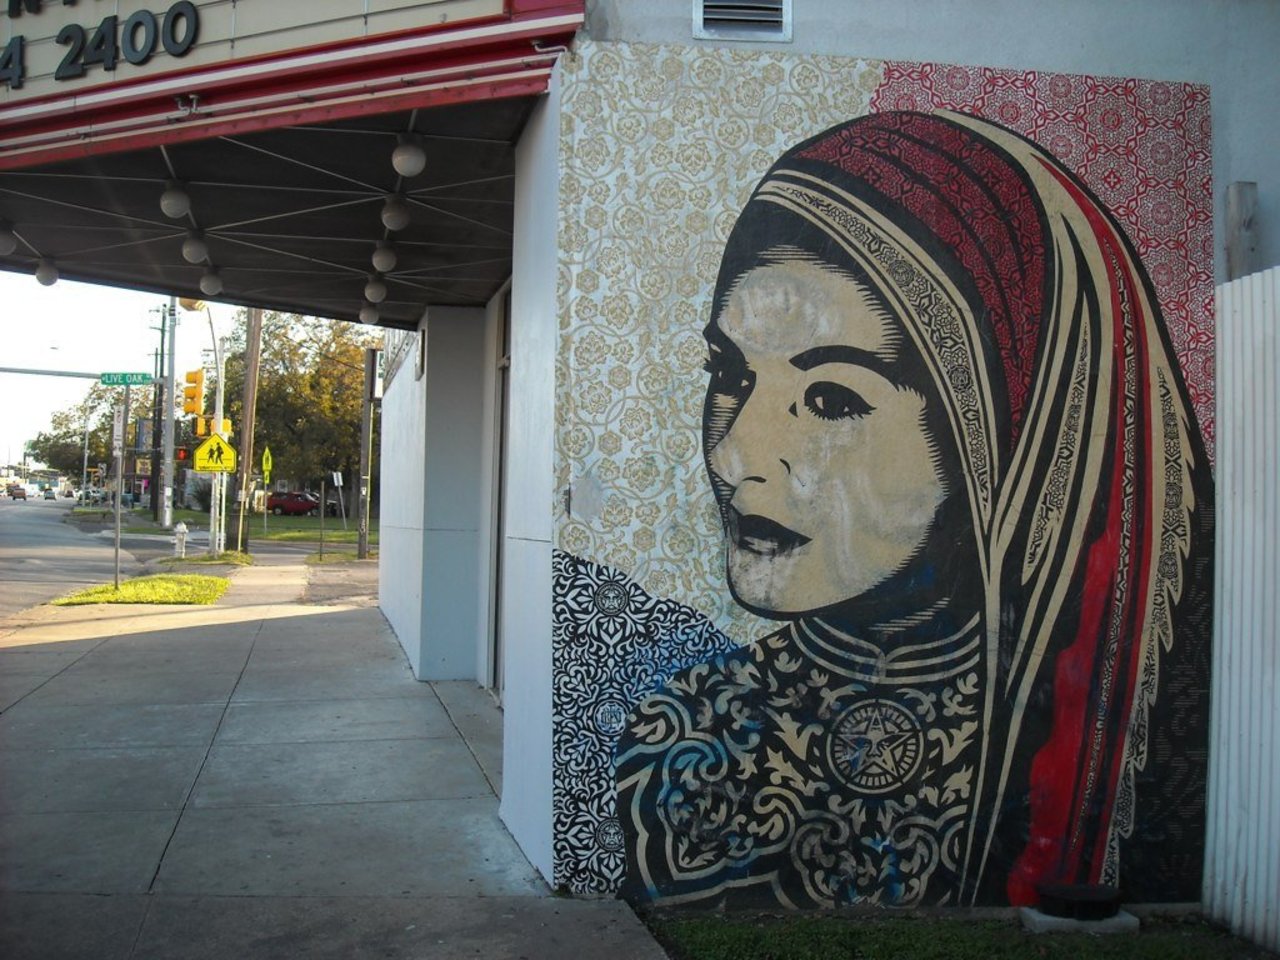 "Woman" by Shepard Fairey Austin, TX#streetart #mural #graffiti #ATX https://t.co/SL1pLfLYga